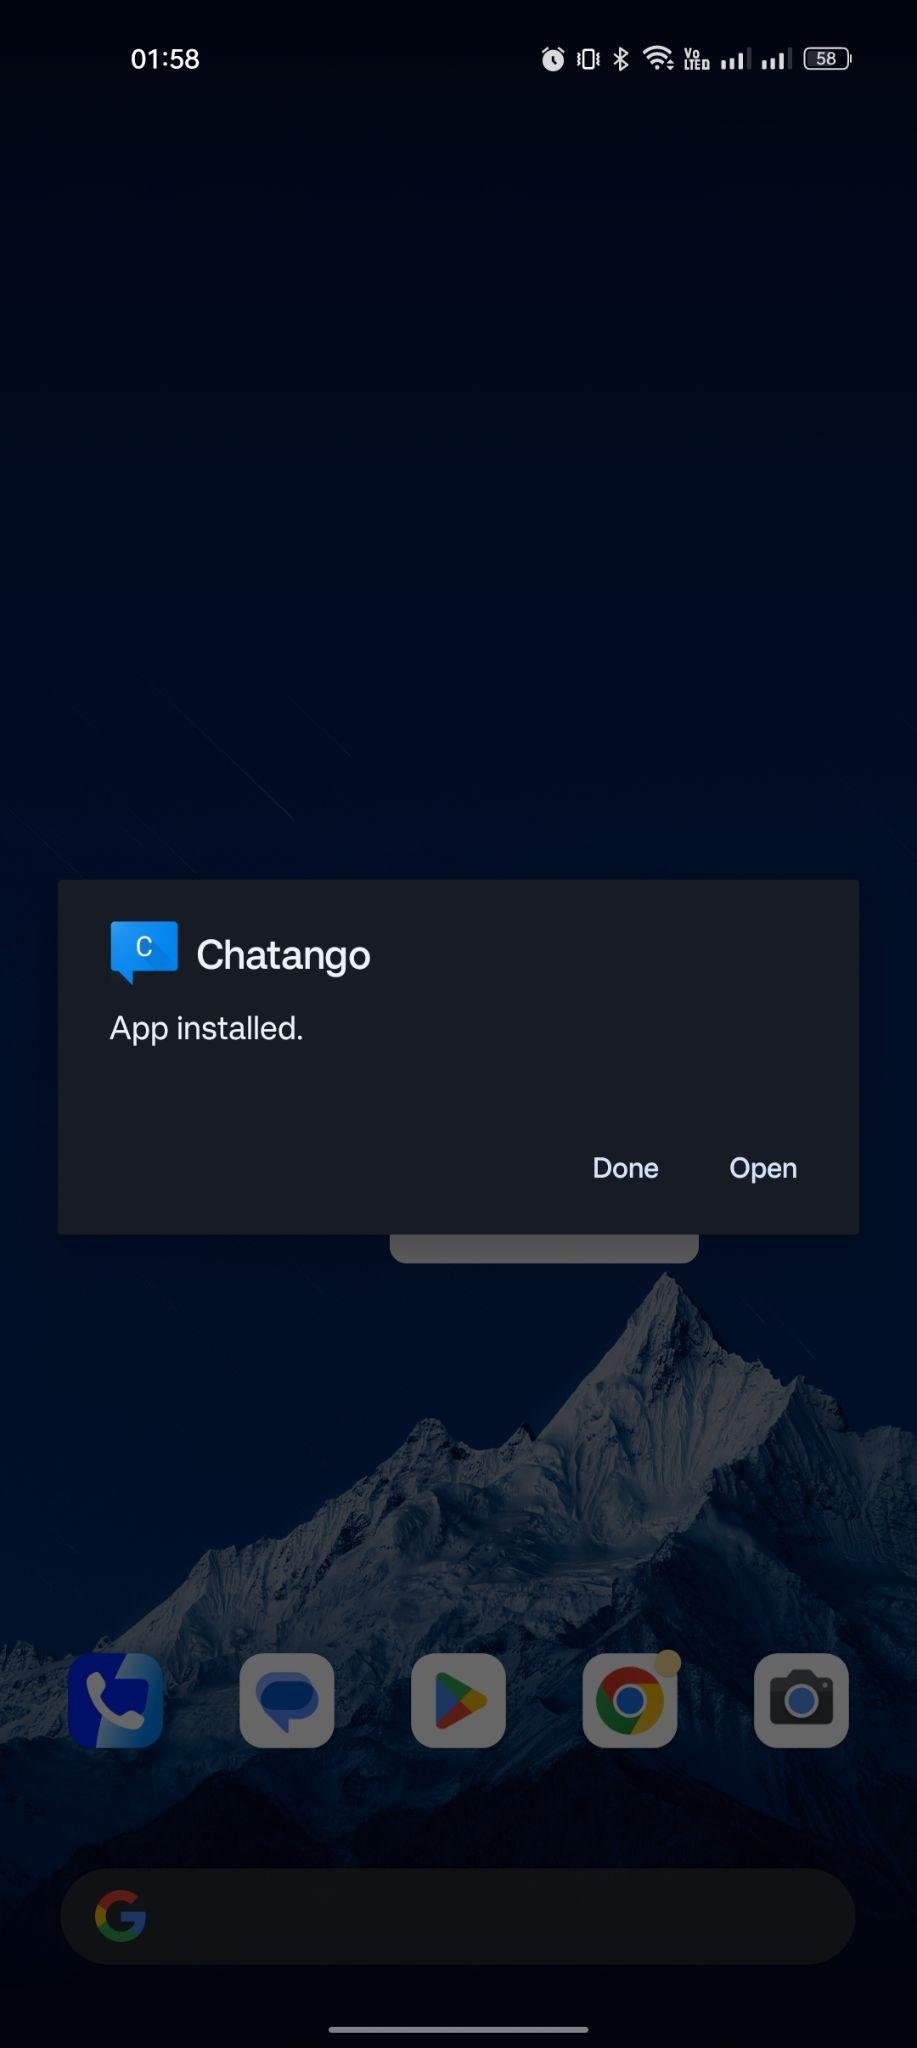 Chatango apk installed